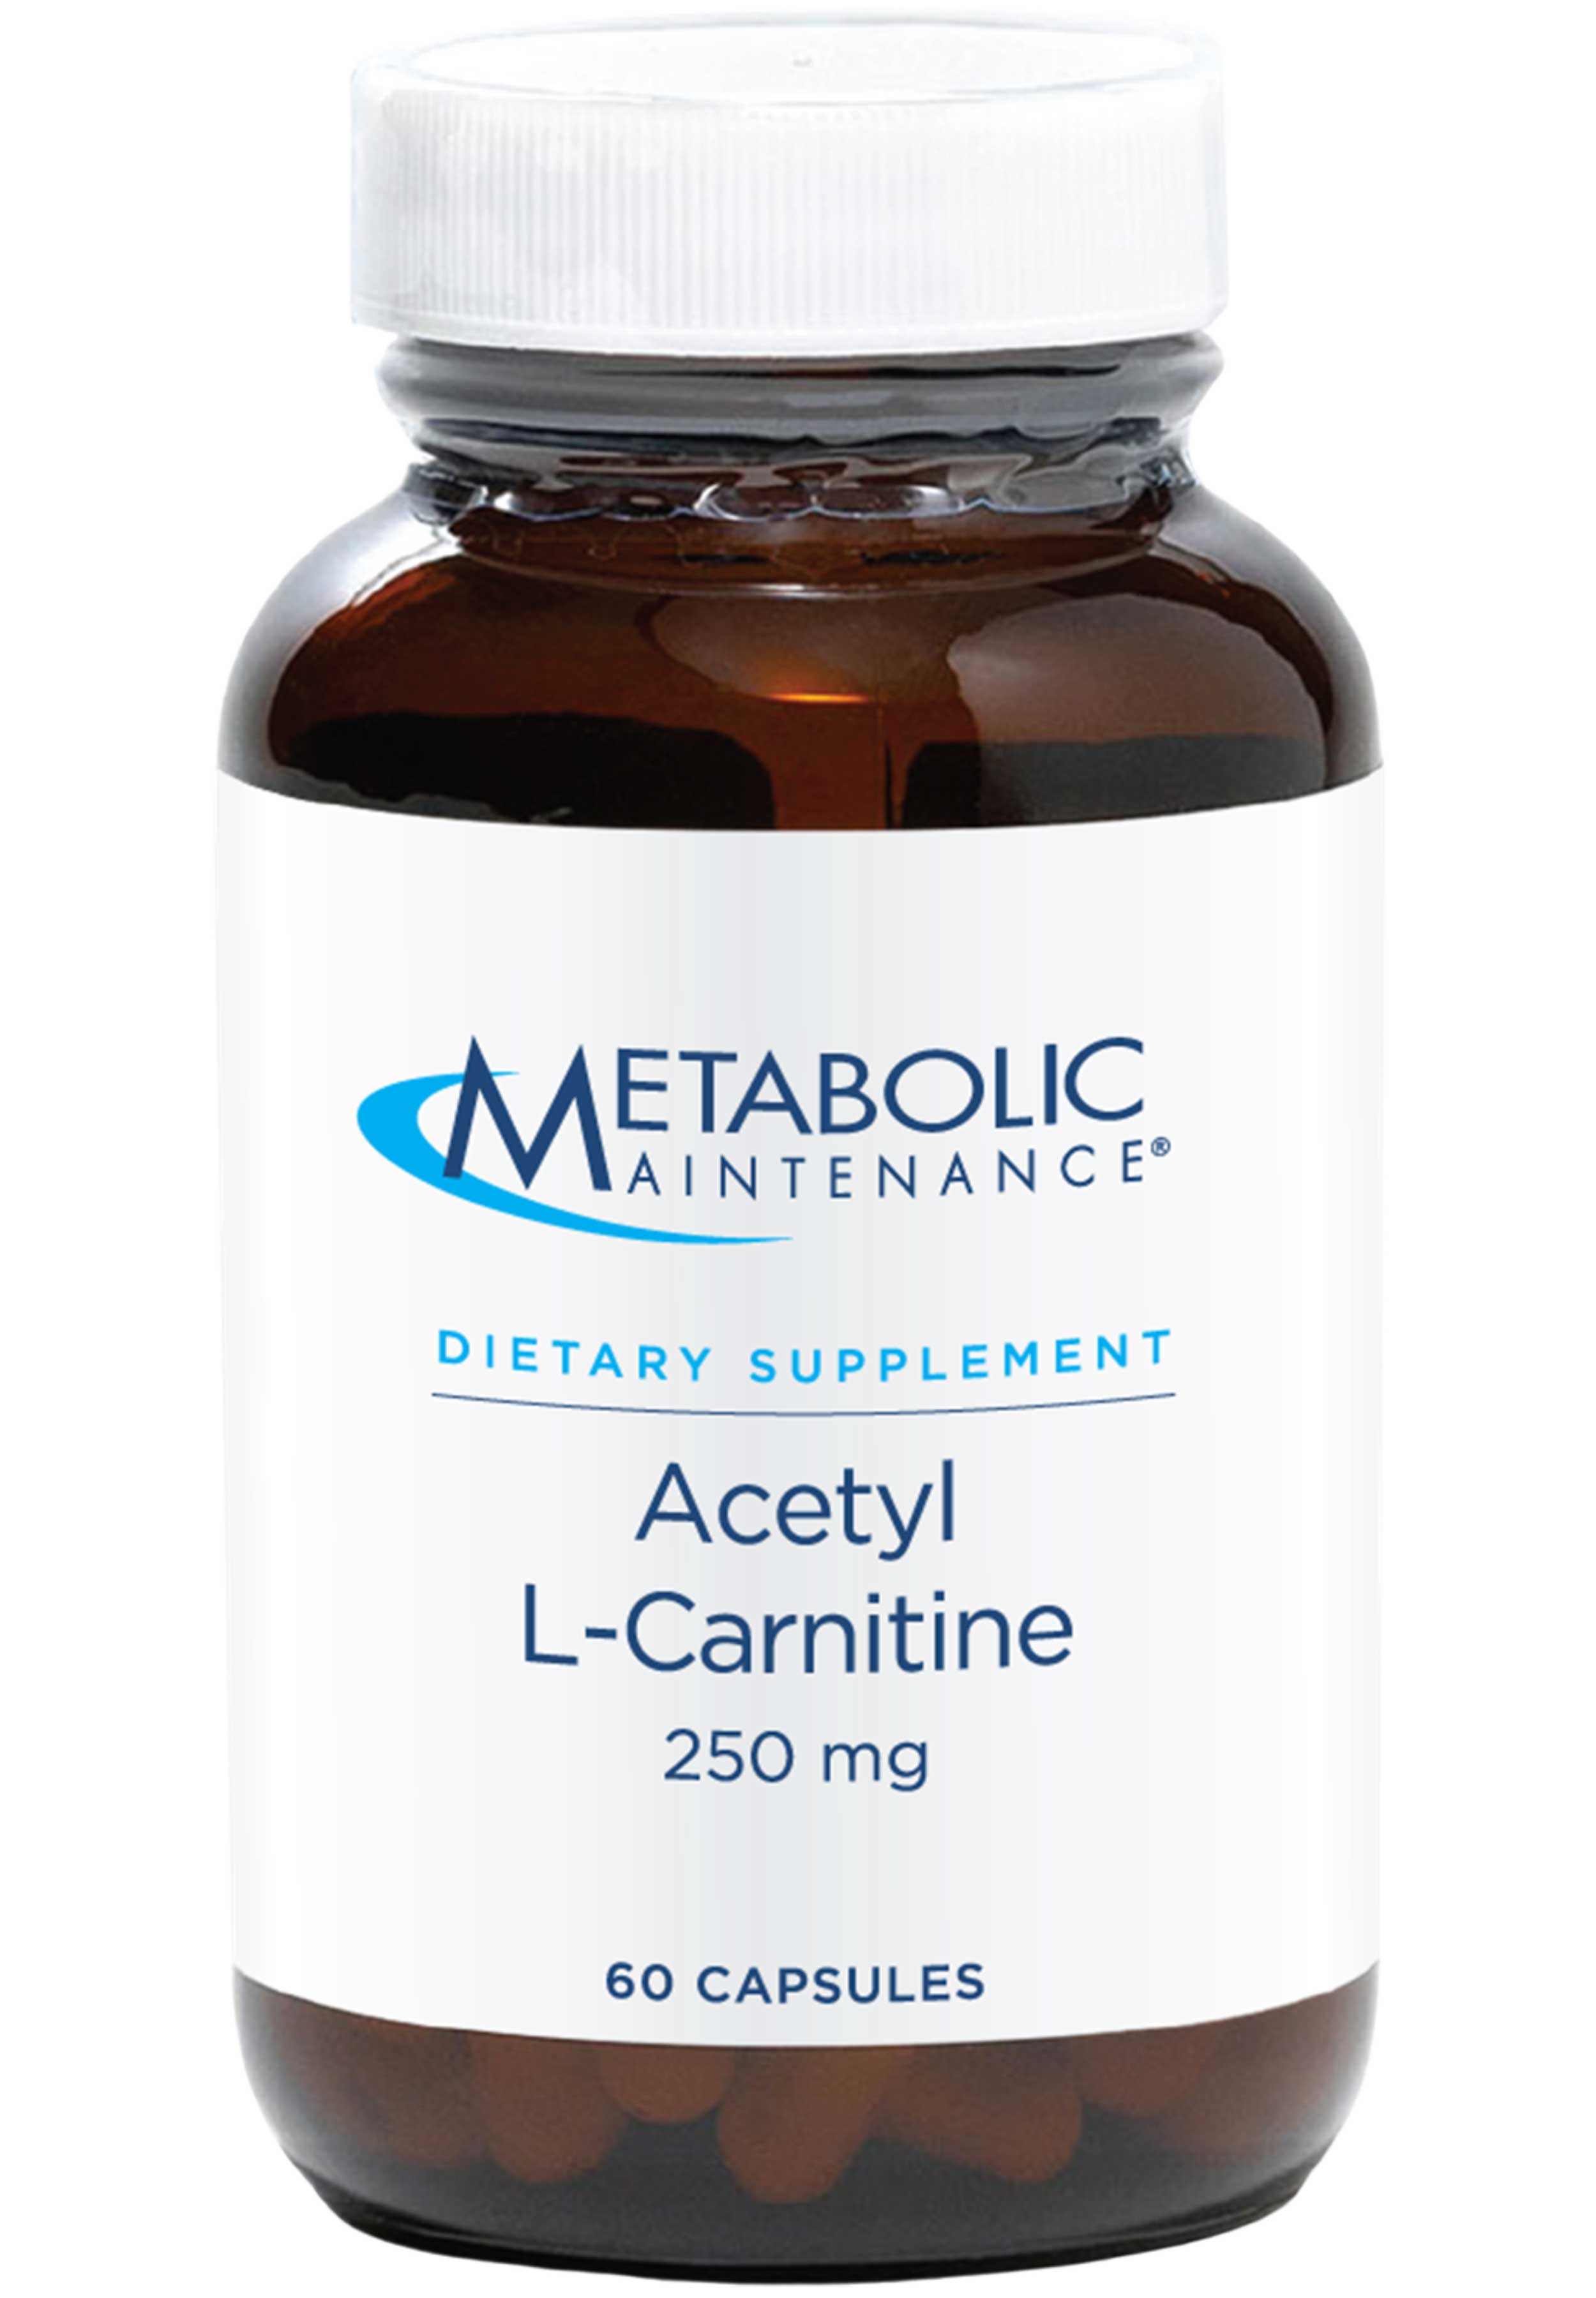 Metabolic Maintenance Acetyl L-Carnitine 250 mg